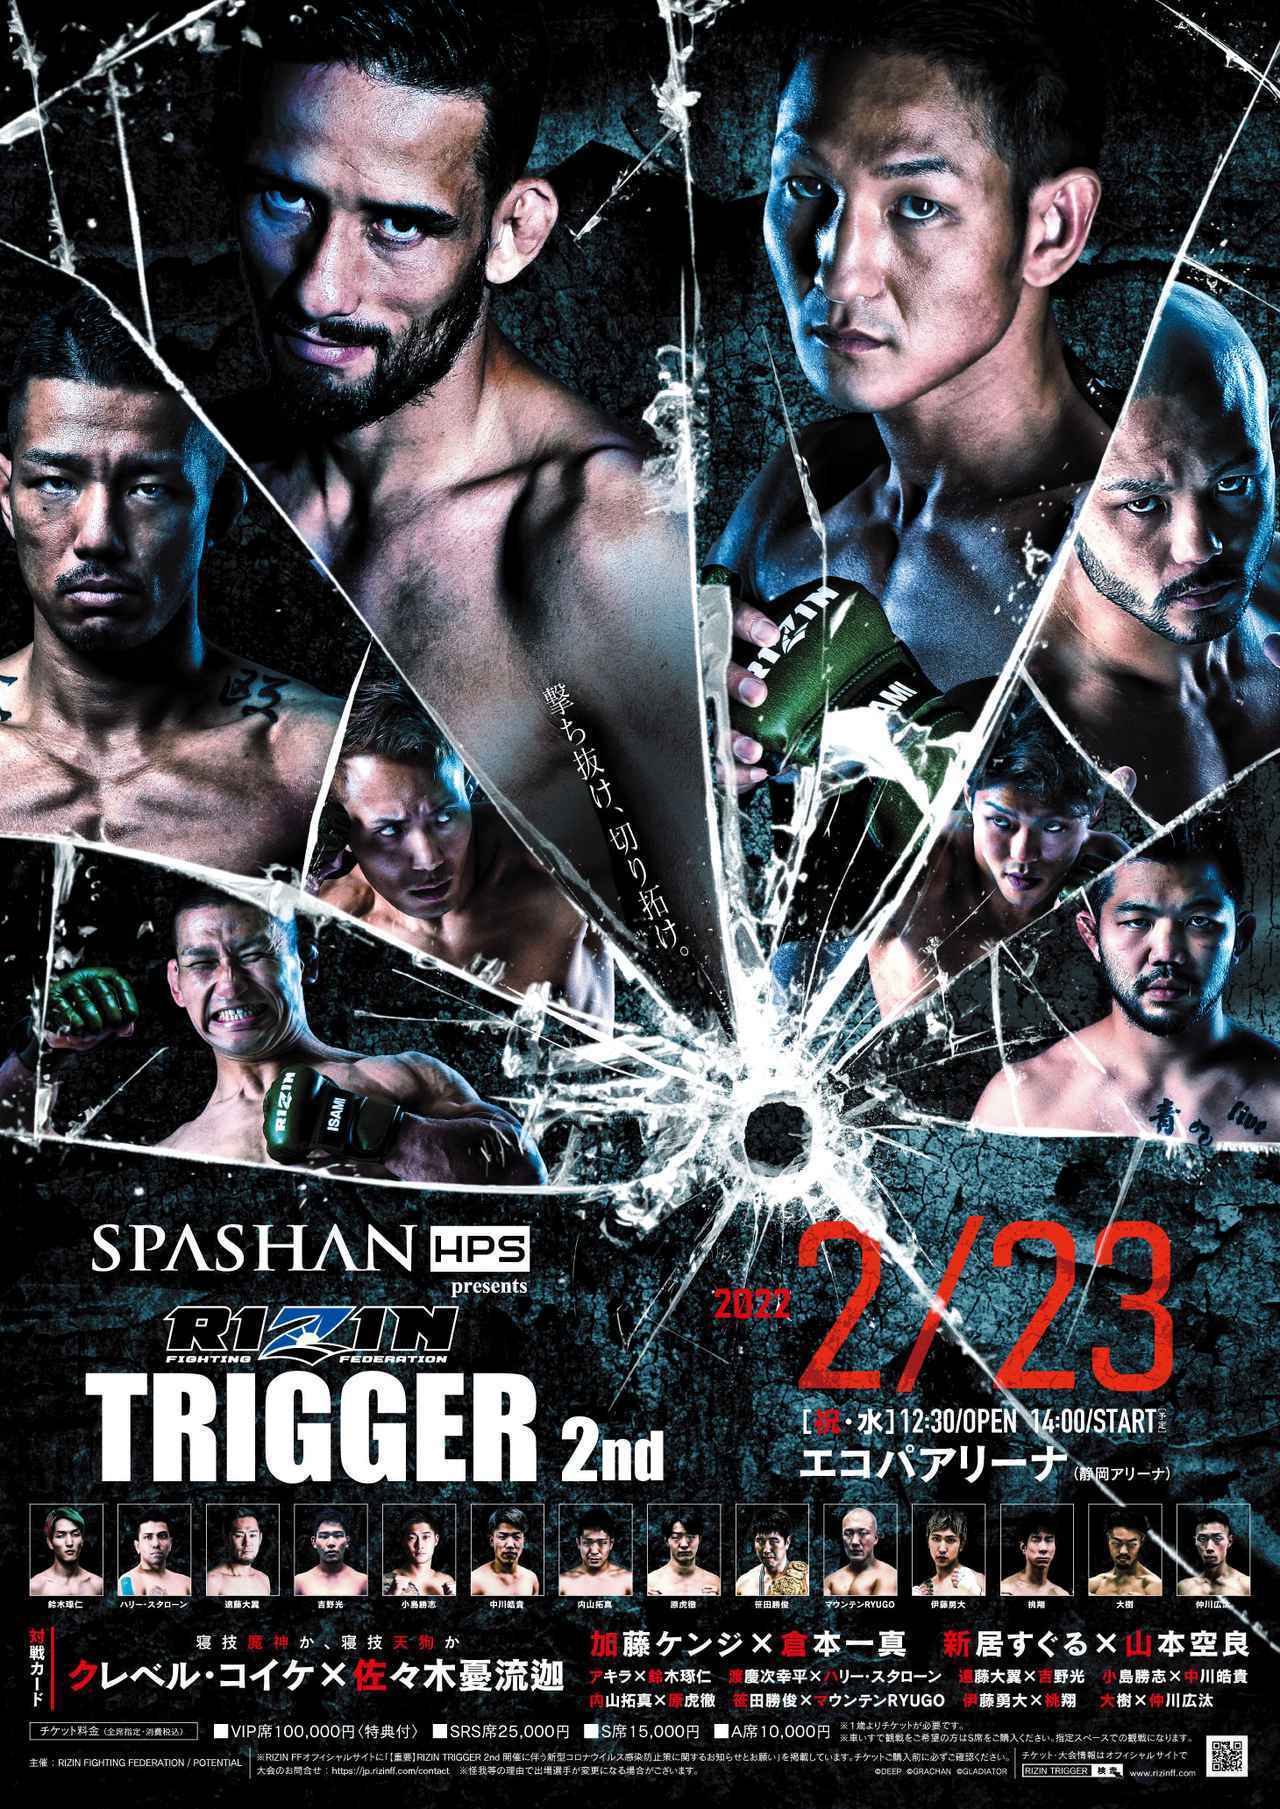 『SPASHAN HPS presents RIZIN TRIGGER 2nd』は2月23日（祝・水）にエコパアリーナ（静岡アリーナ）で開催される